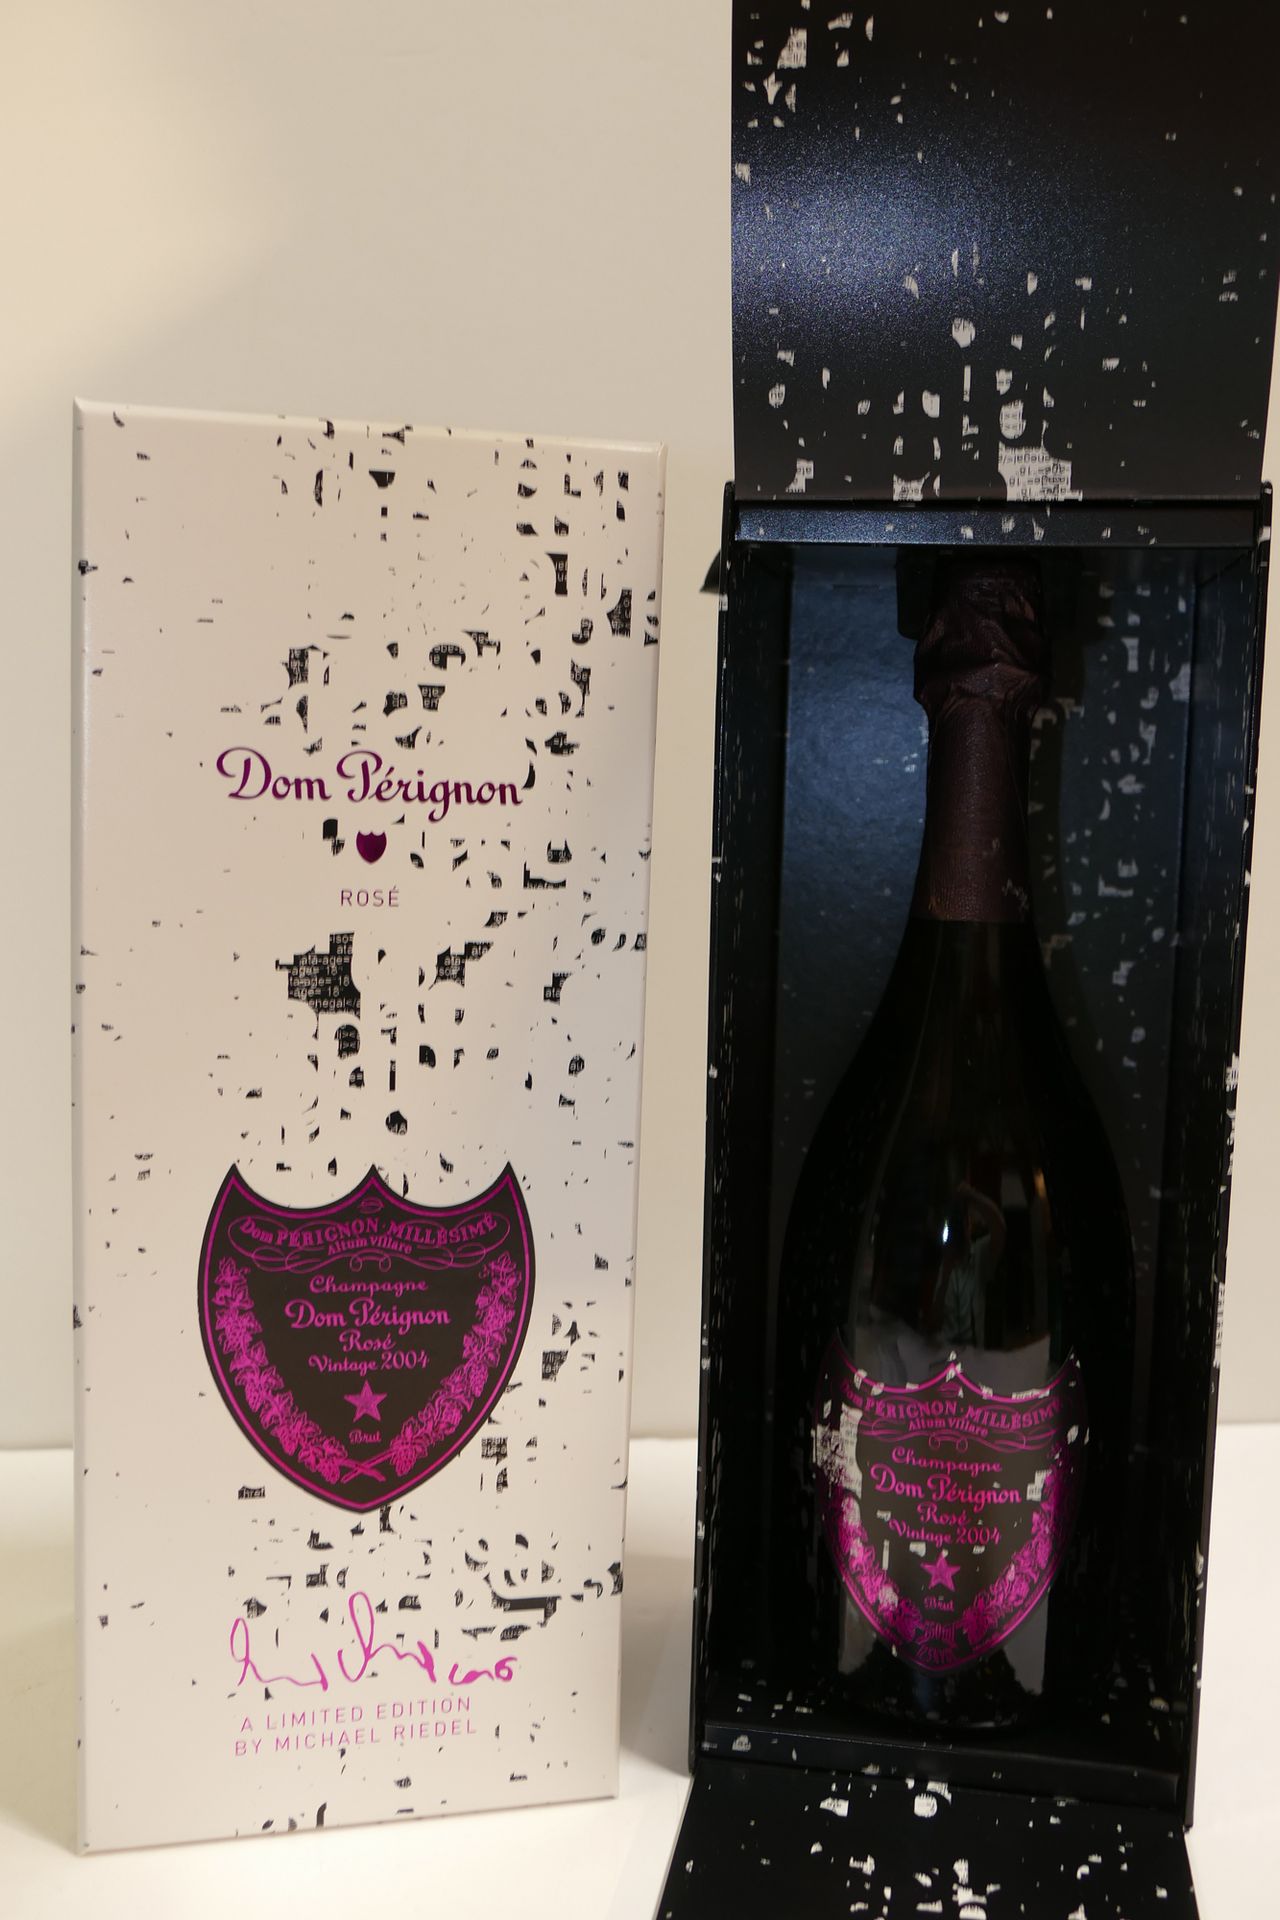 Null 1 Btle Champagne Dom Pérignon rosé 2004 Limited Edition Michael Riedel in a&hellip;